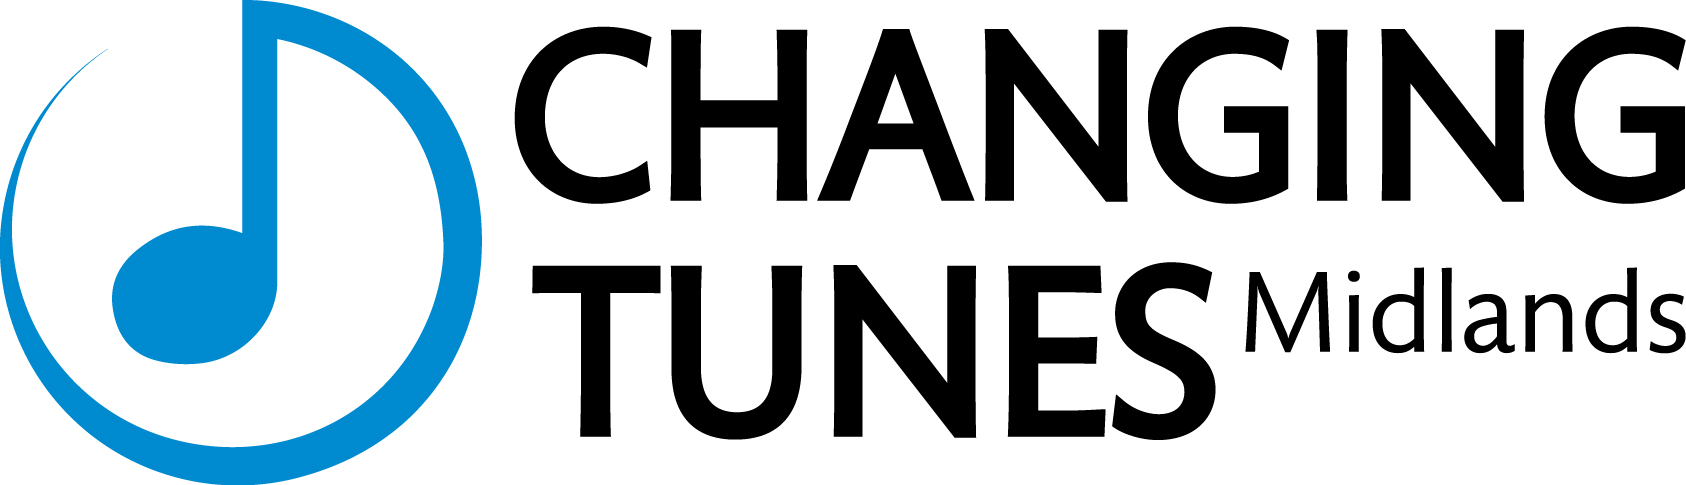 Changing Tunes Midl&s Ltd